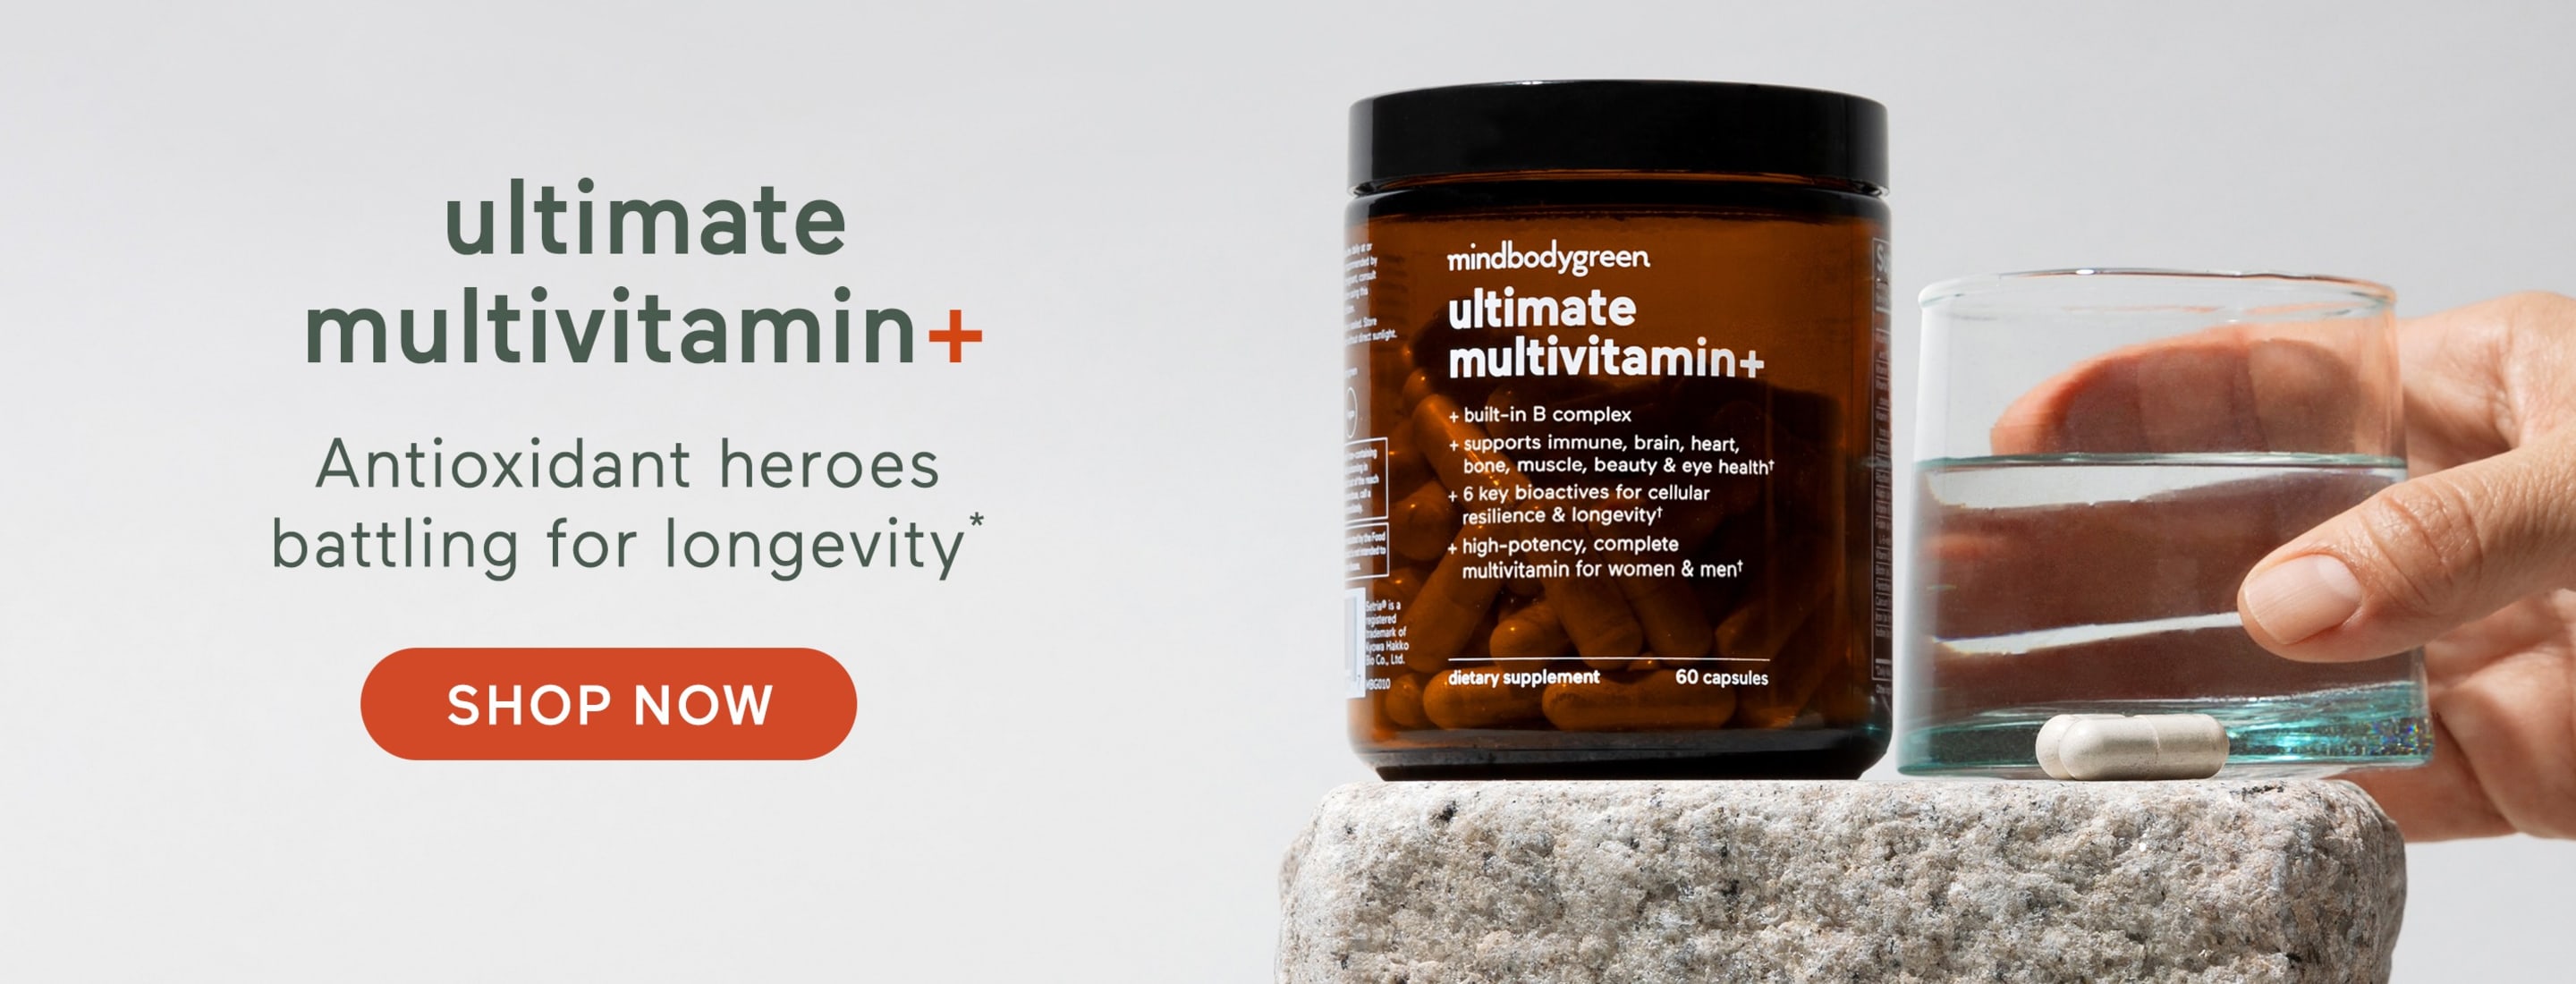 ultimate multivitamin+. Antioxidant heroes battling for longevity. Shop Now